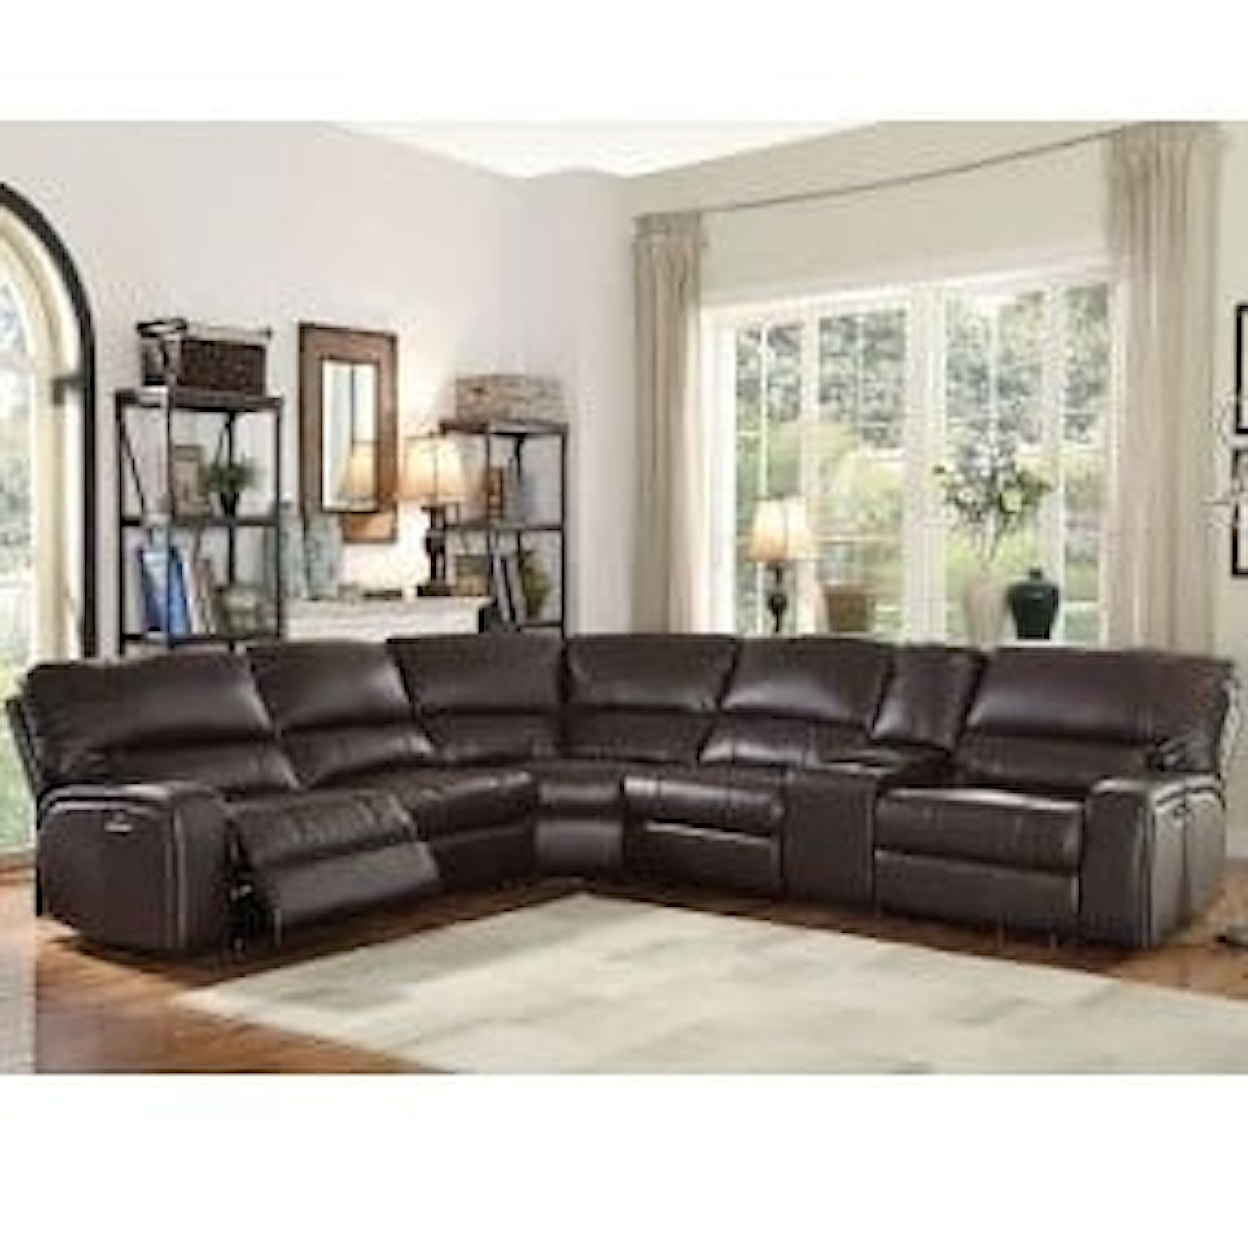 Acme Furniture Saul Power Motion Sectional Sofa